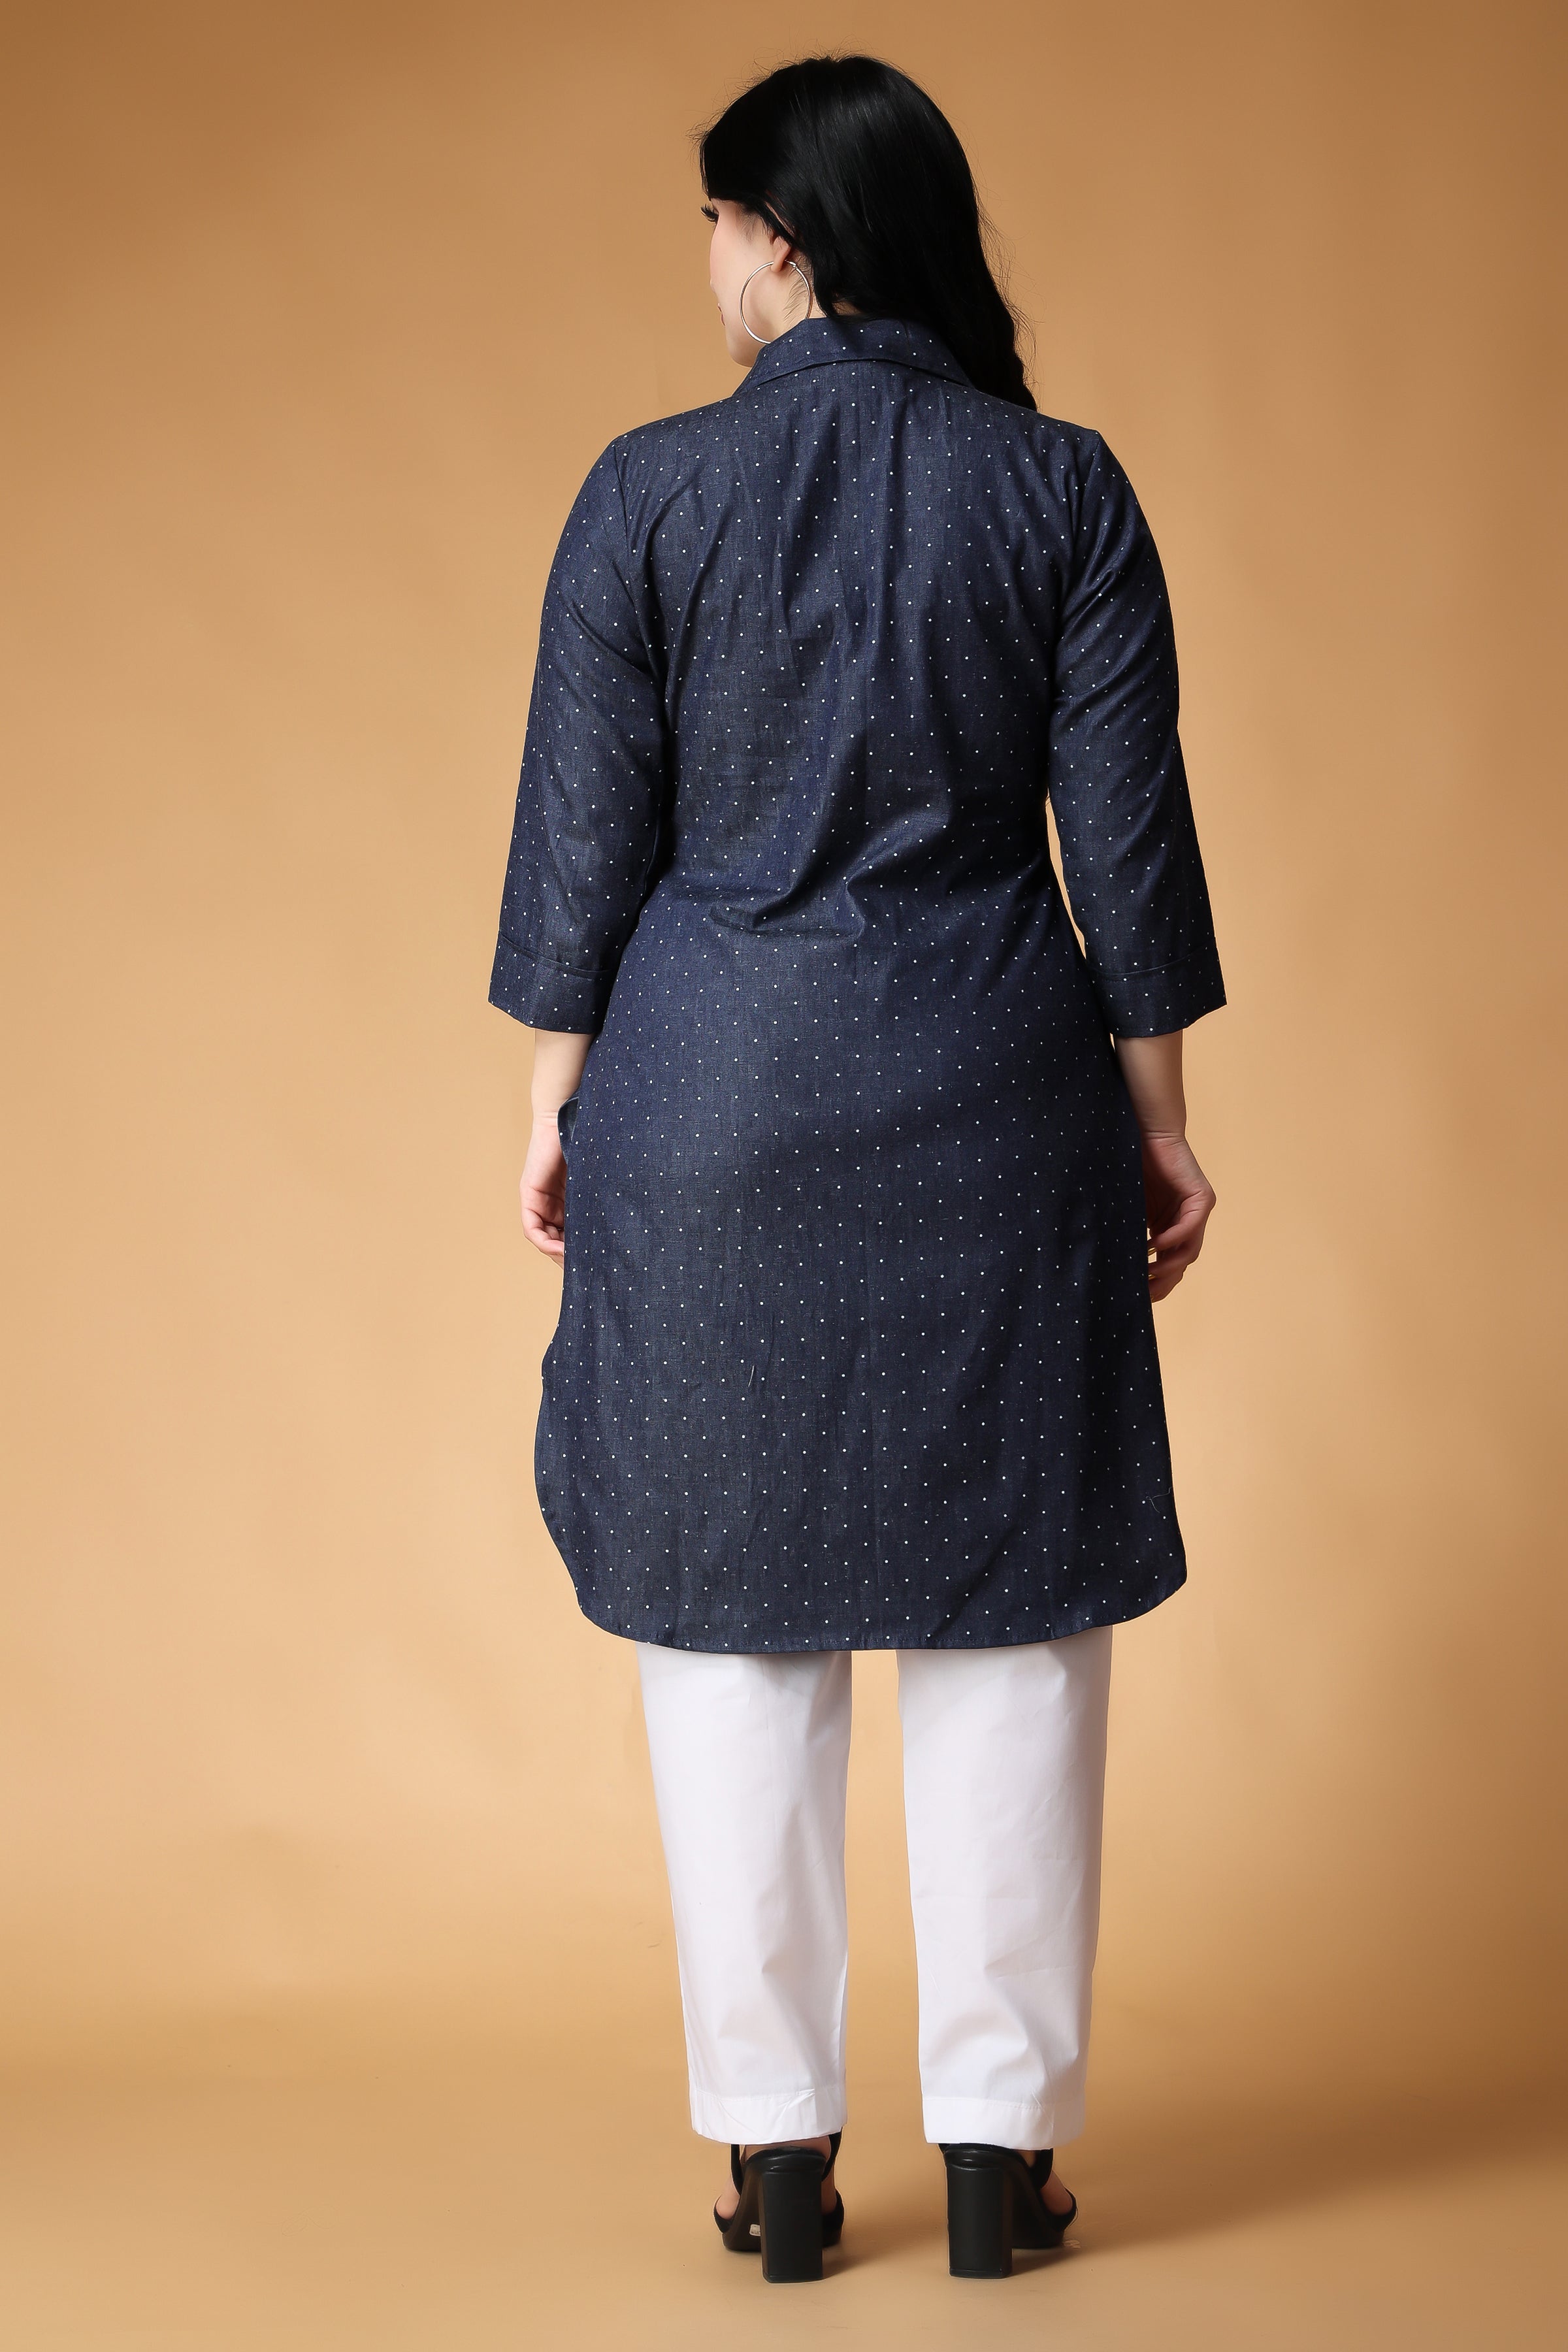 Enterprises Anmol Fashion Dark Blue Solid Denim Kurti for Women (XX-Large)  : Amazon.in: Fashion